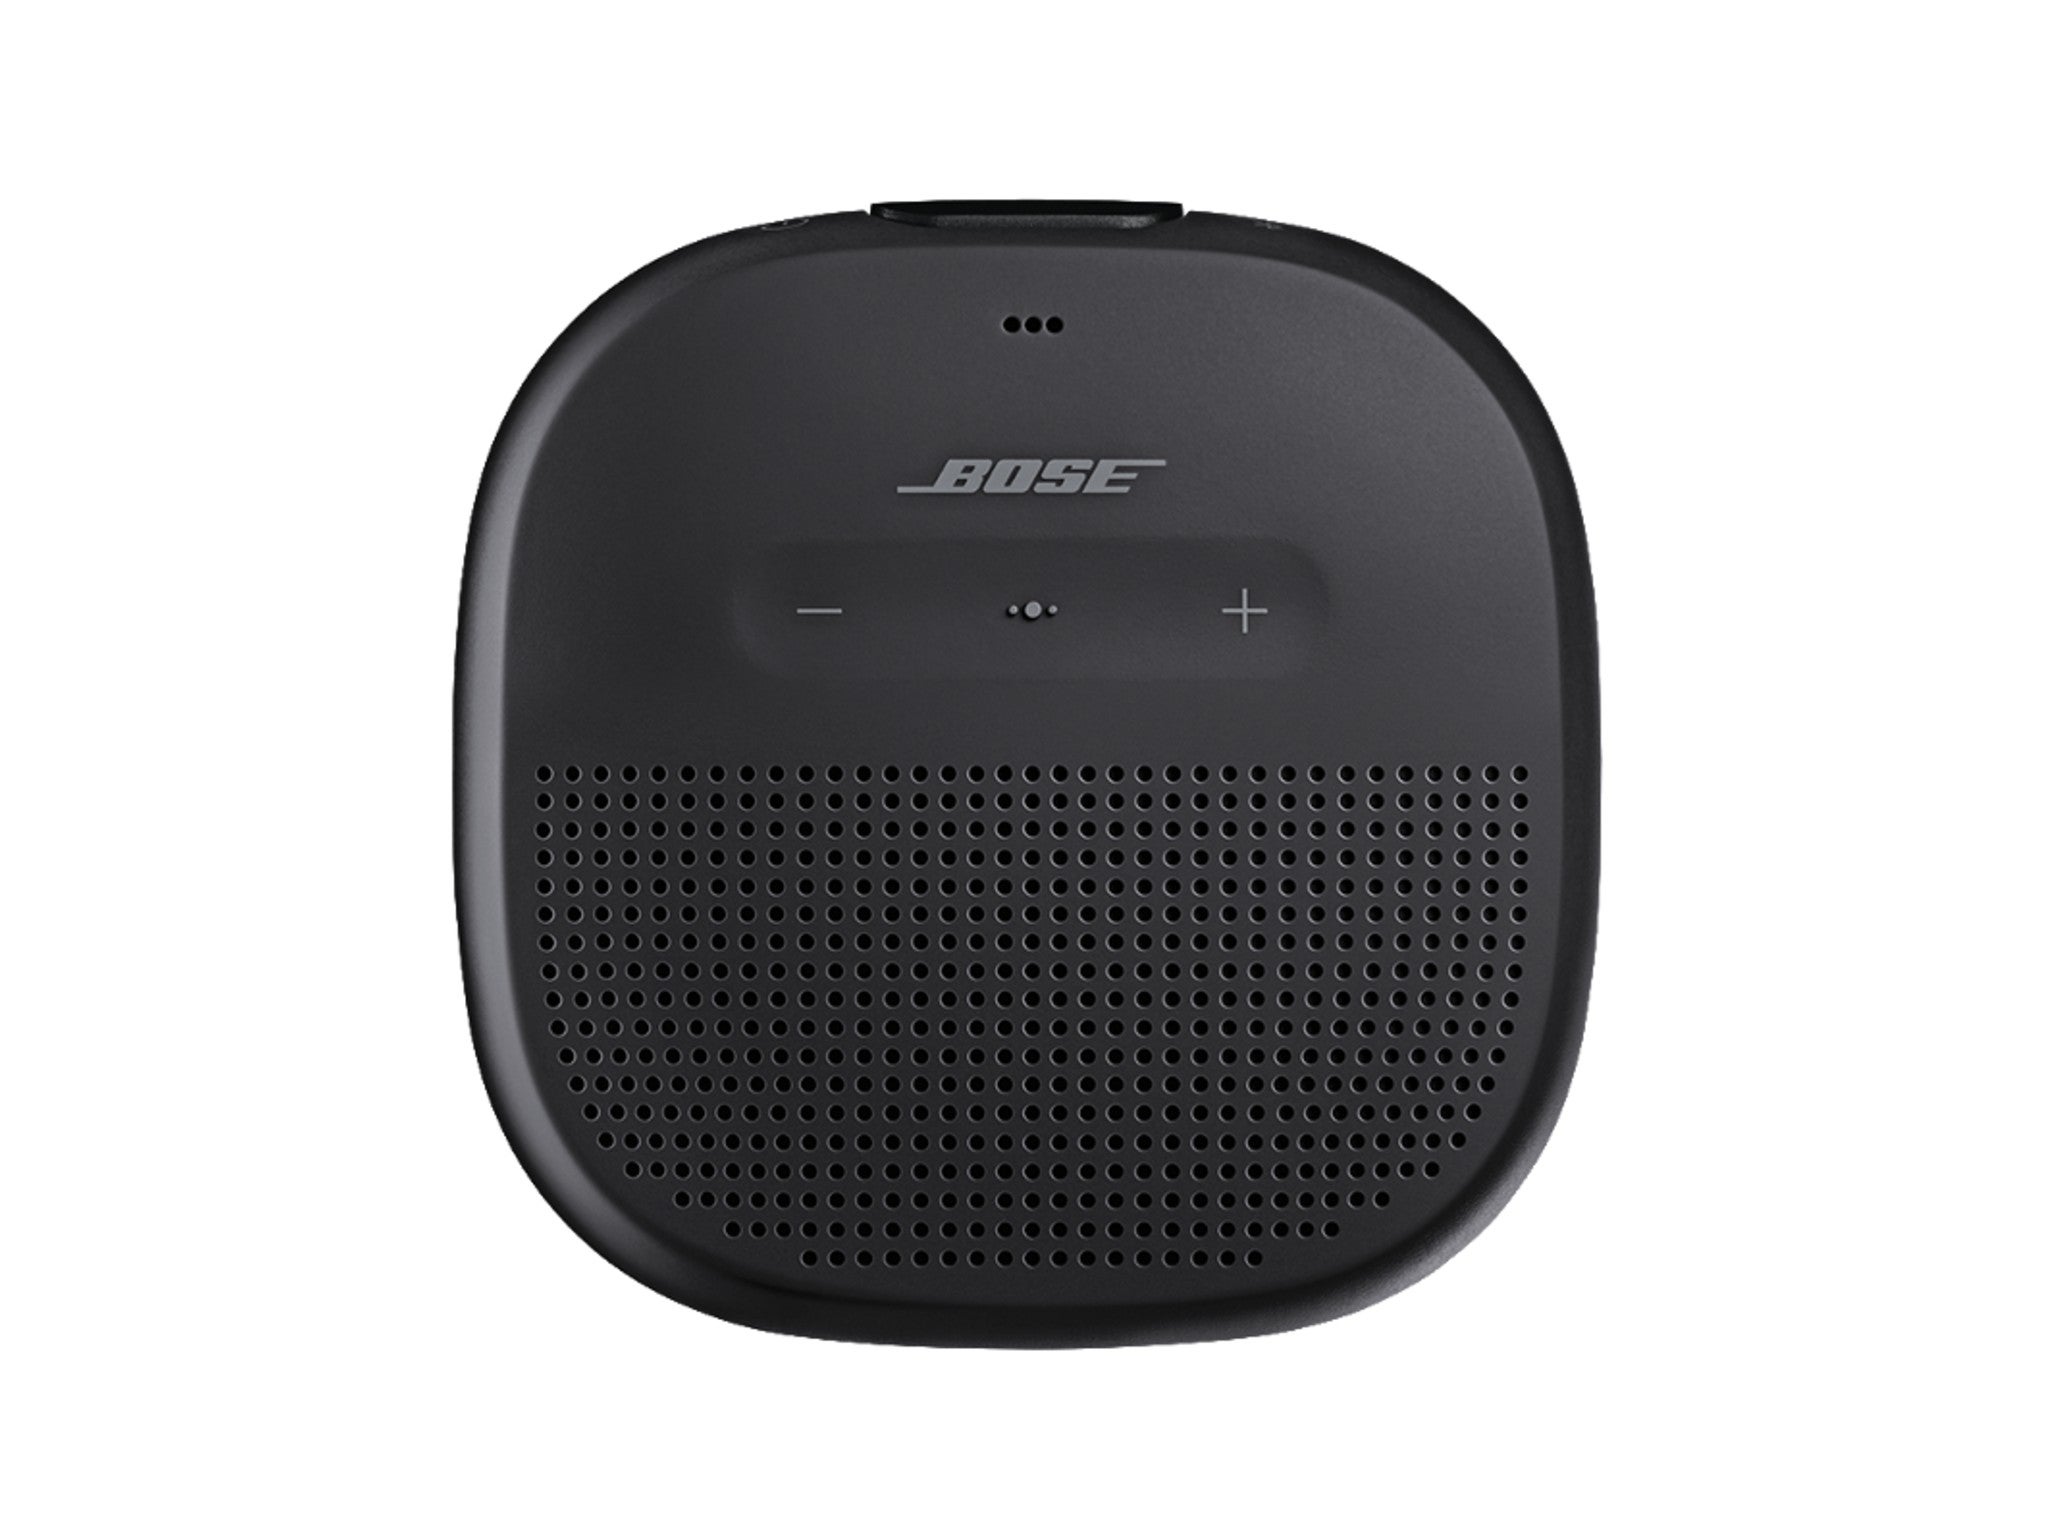 Bose SoundLink micro – IPX7 indybest.jpeg